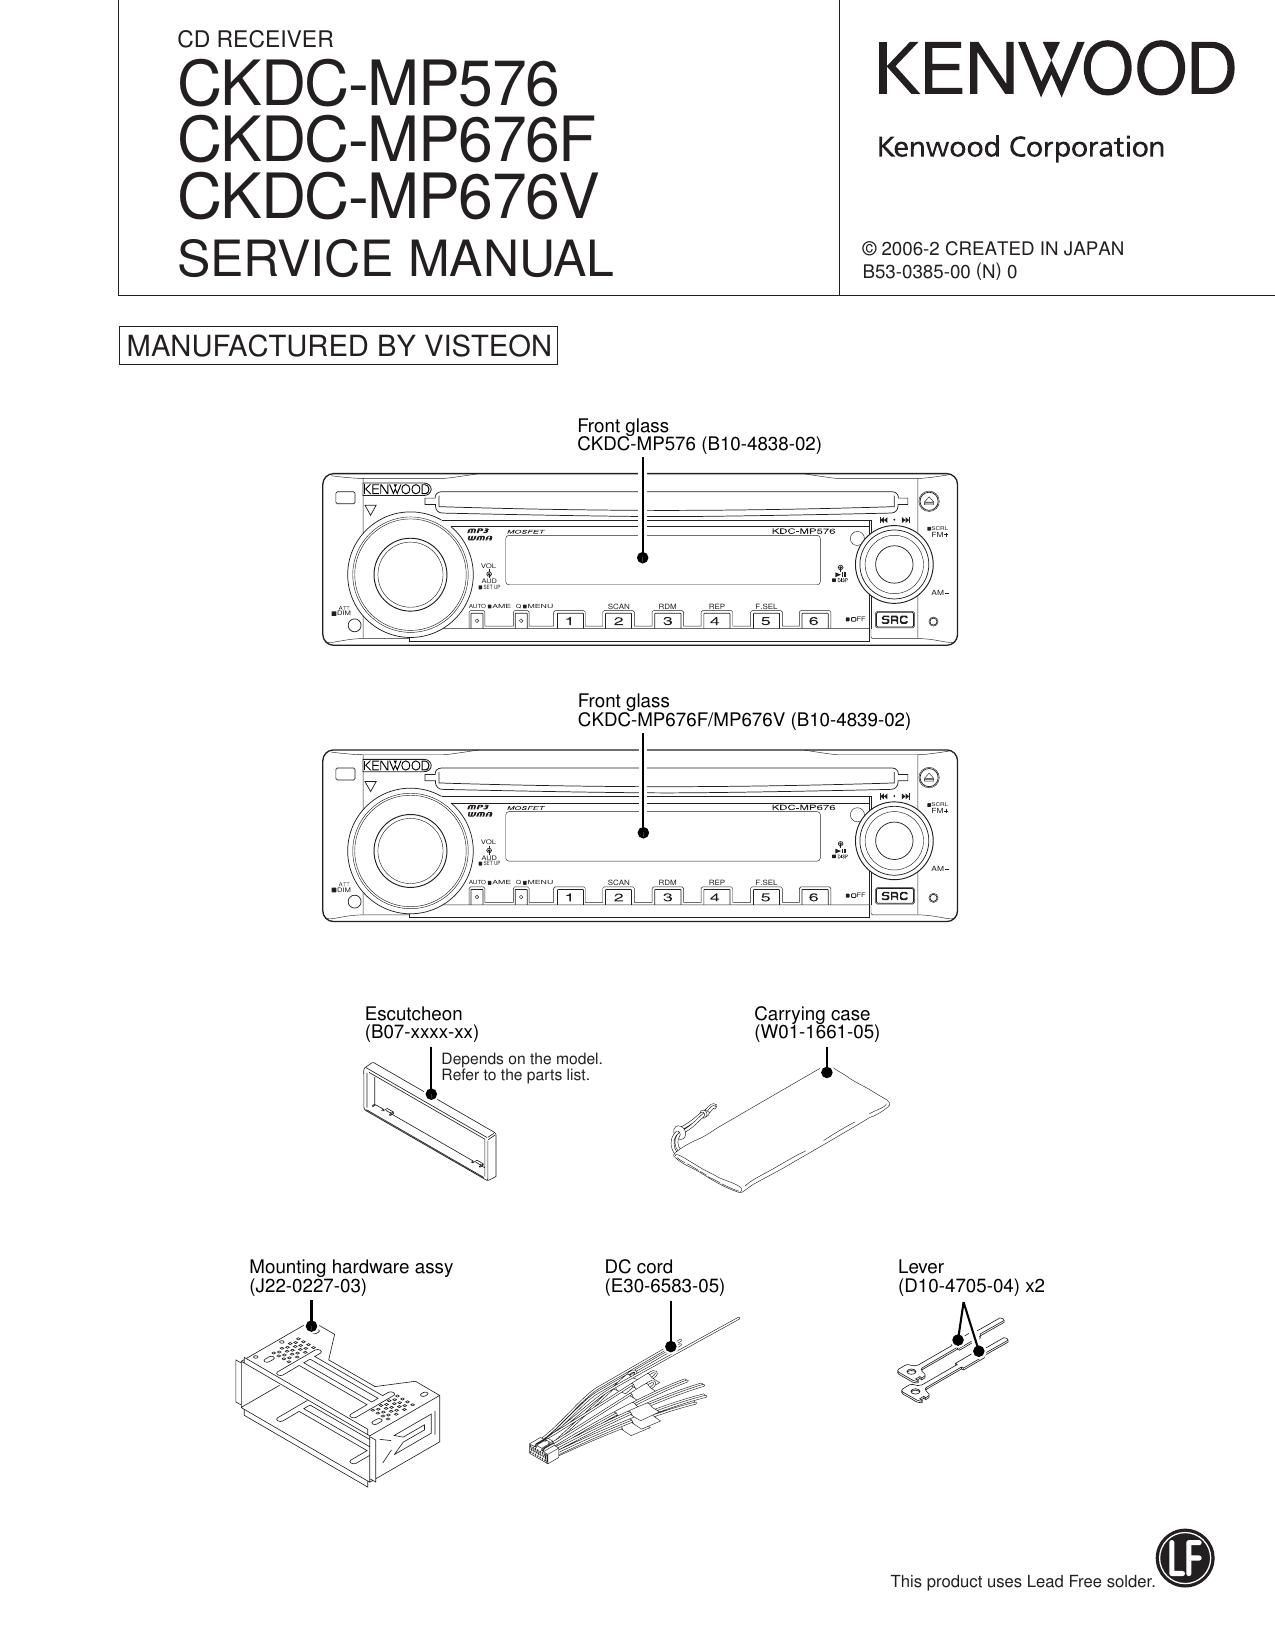 Kenwood CKDC MP 676 F Service Manual